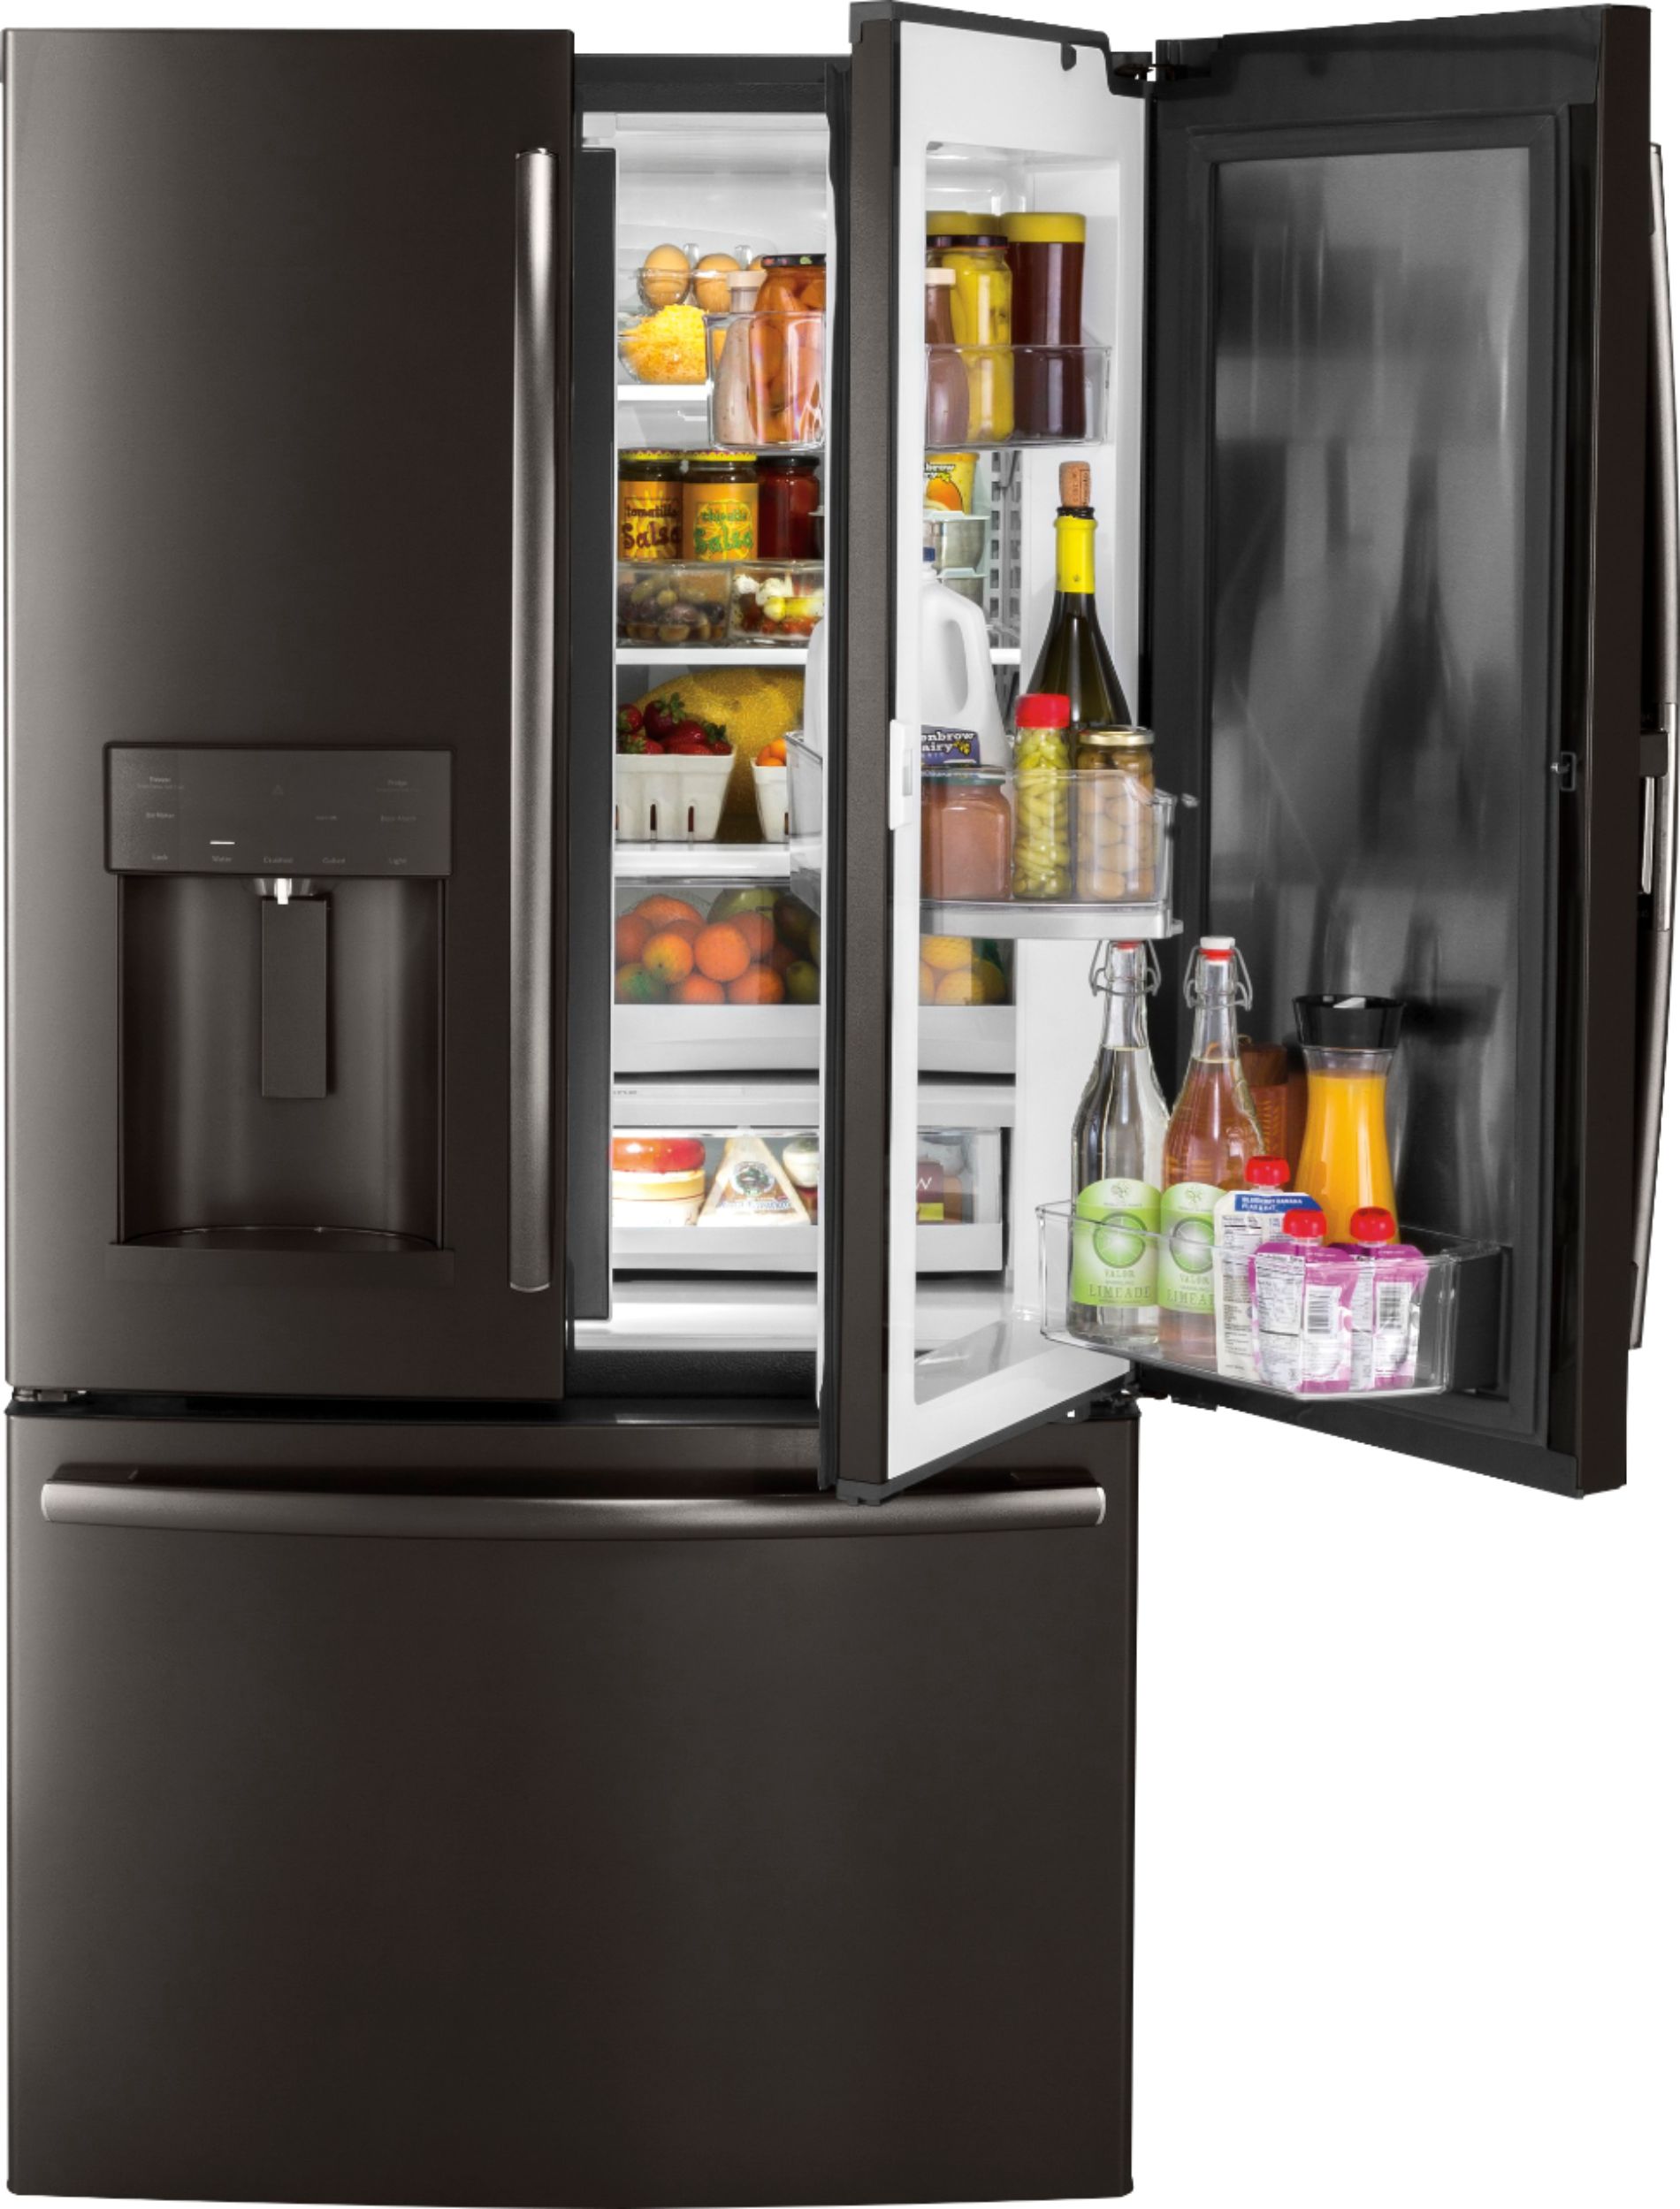 30++ Ge gfd28gynfs refrigerator manual information